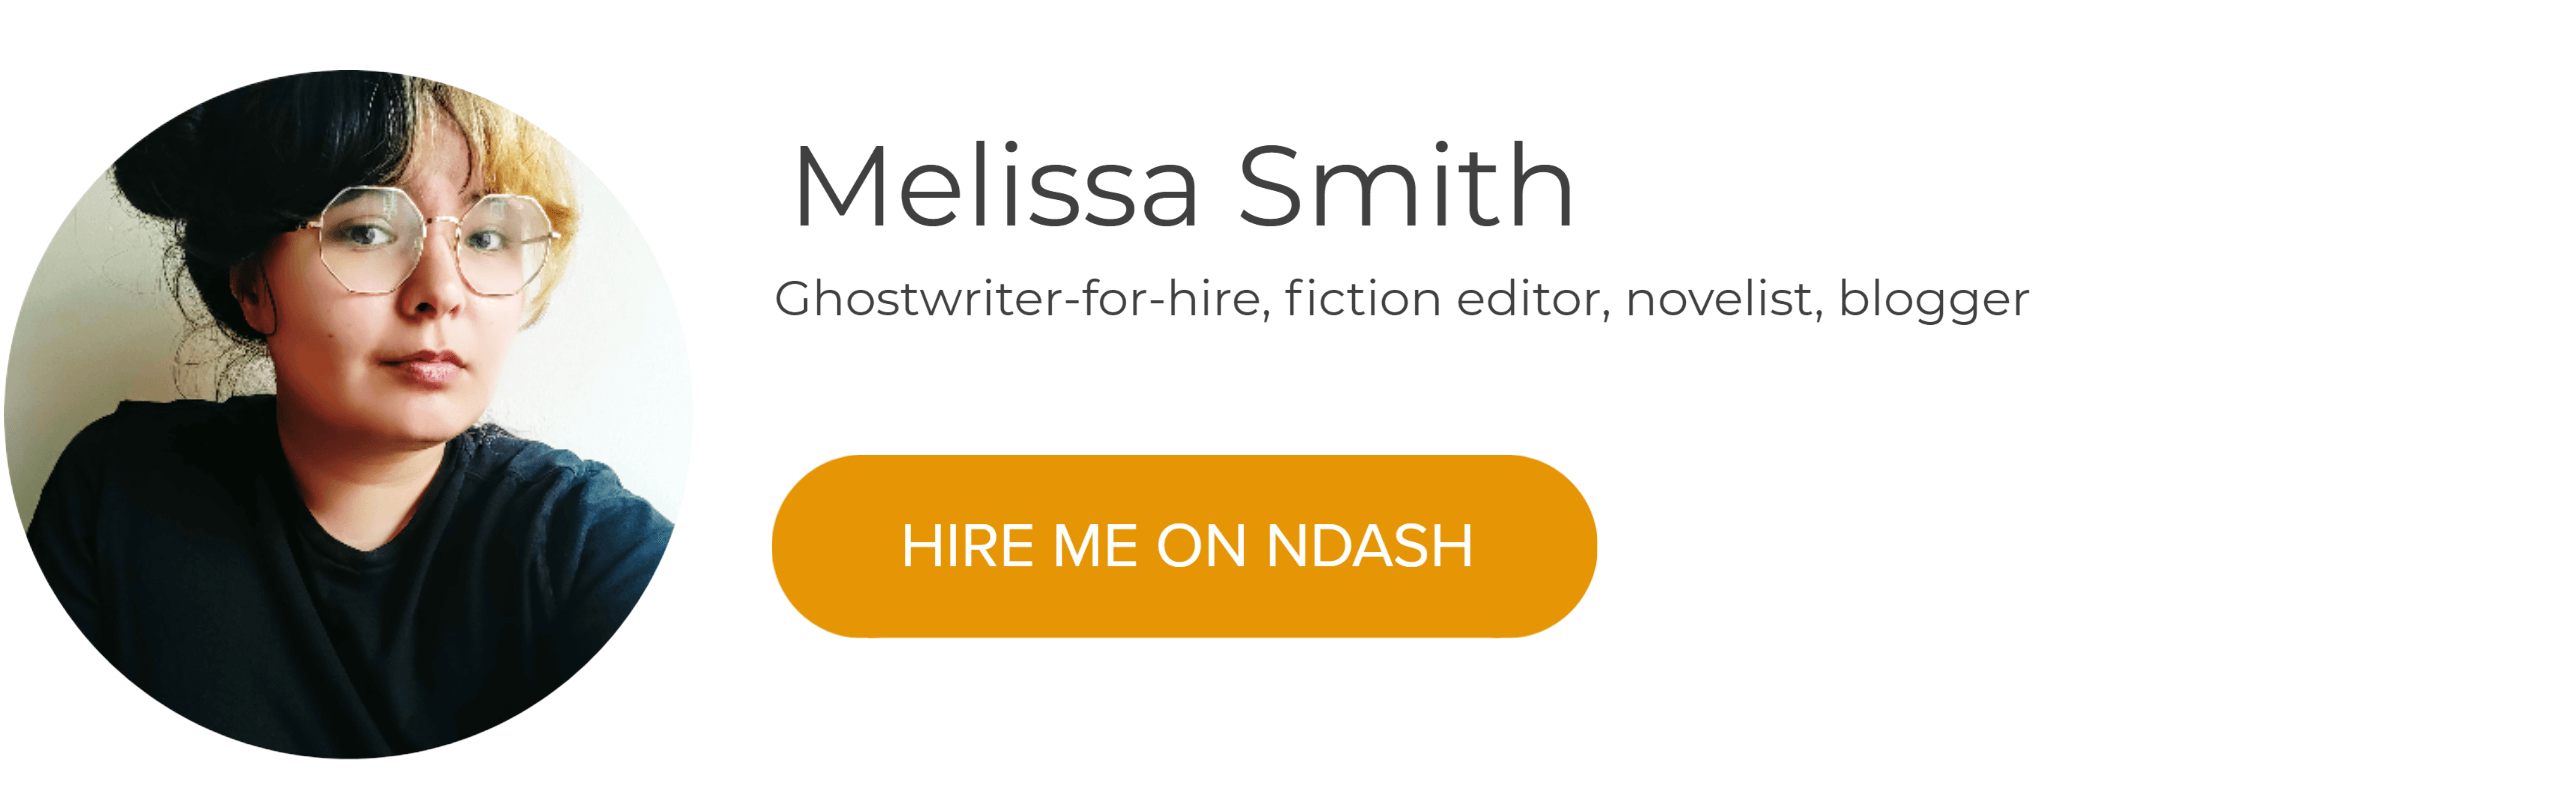 melissa smith, ghostwriter for hire, fiction editor, novelist, blogger